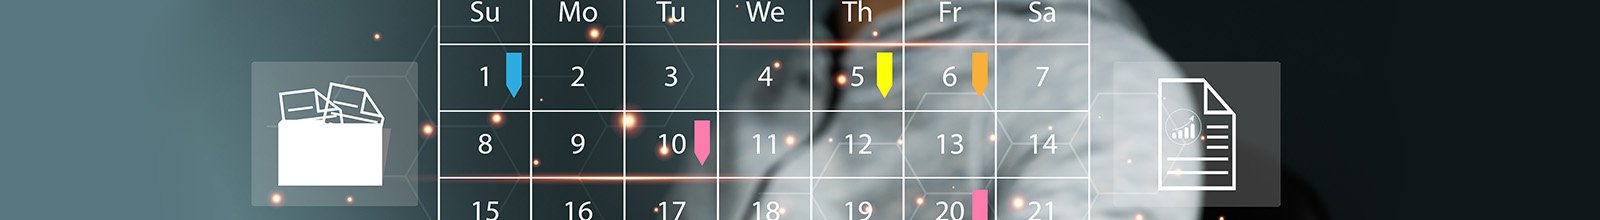 Calendar concept illustrating digital calendar and document icons